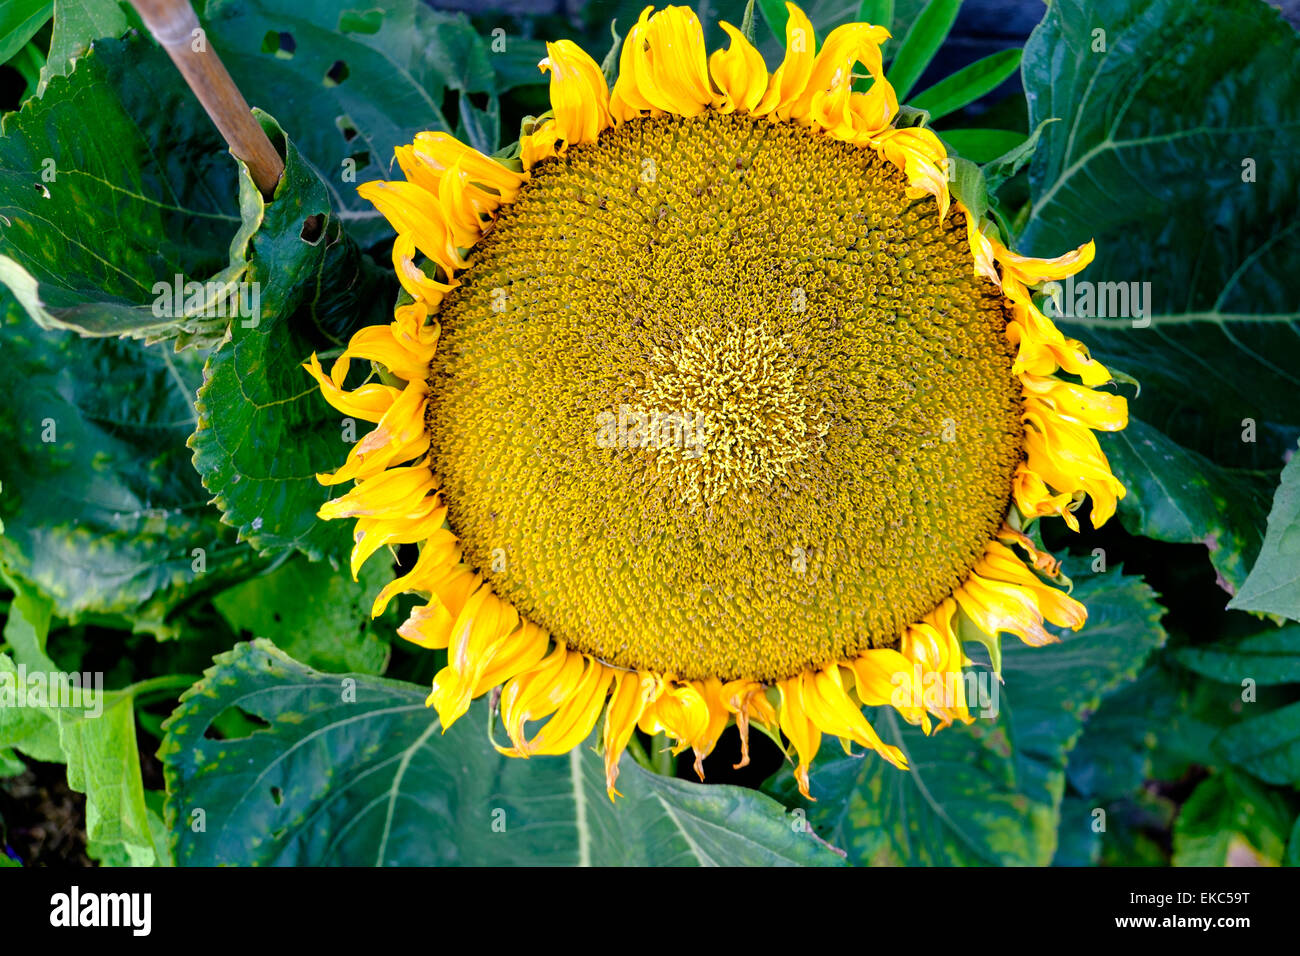 Sunflower head Stock Photo - Alamy